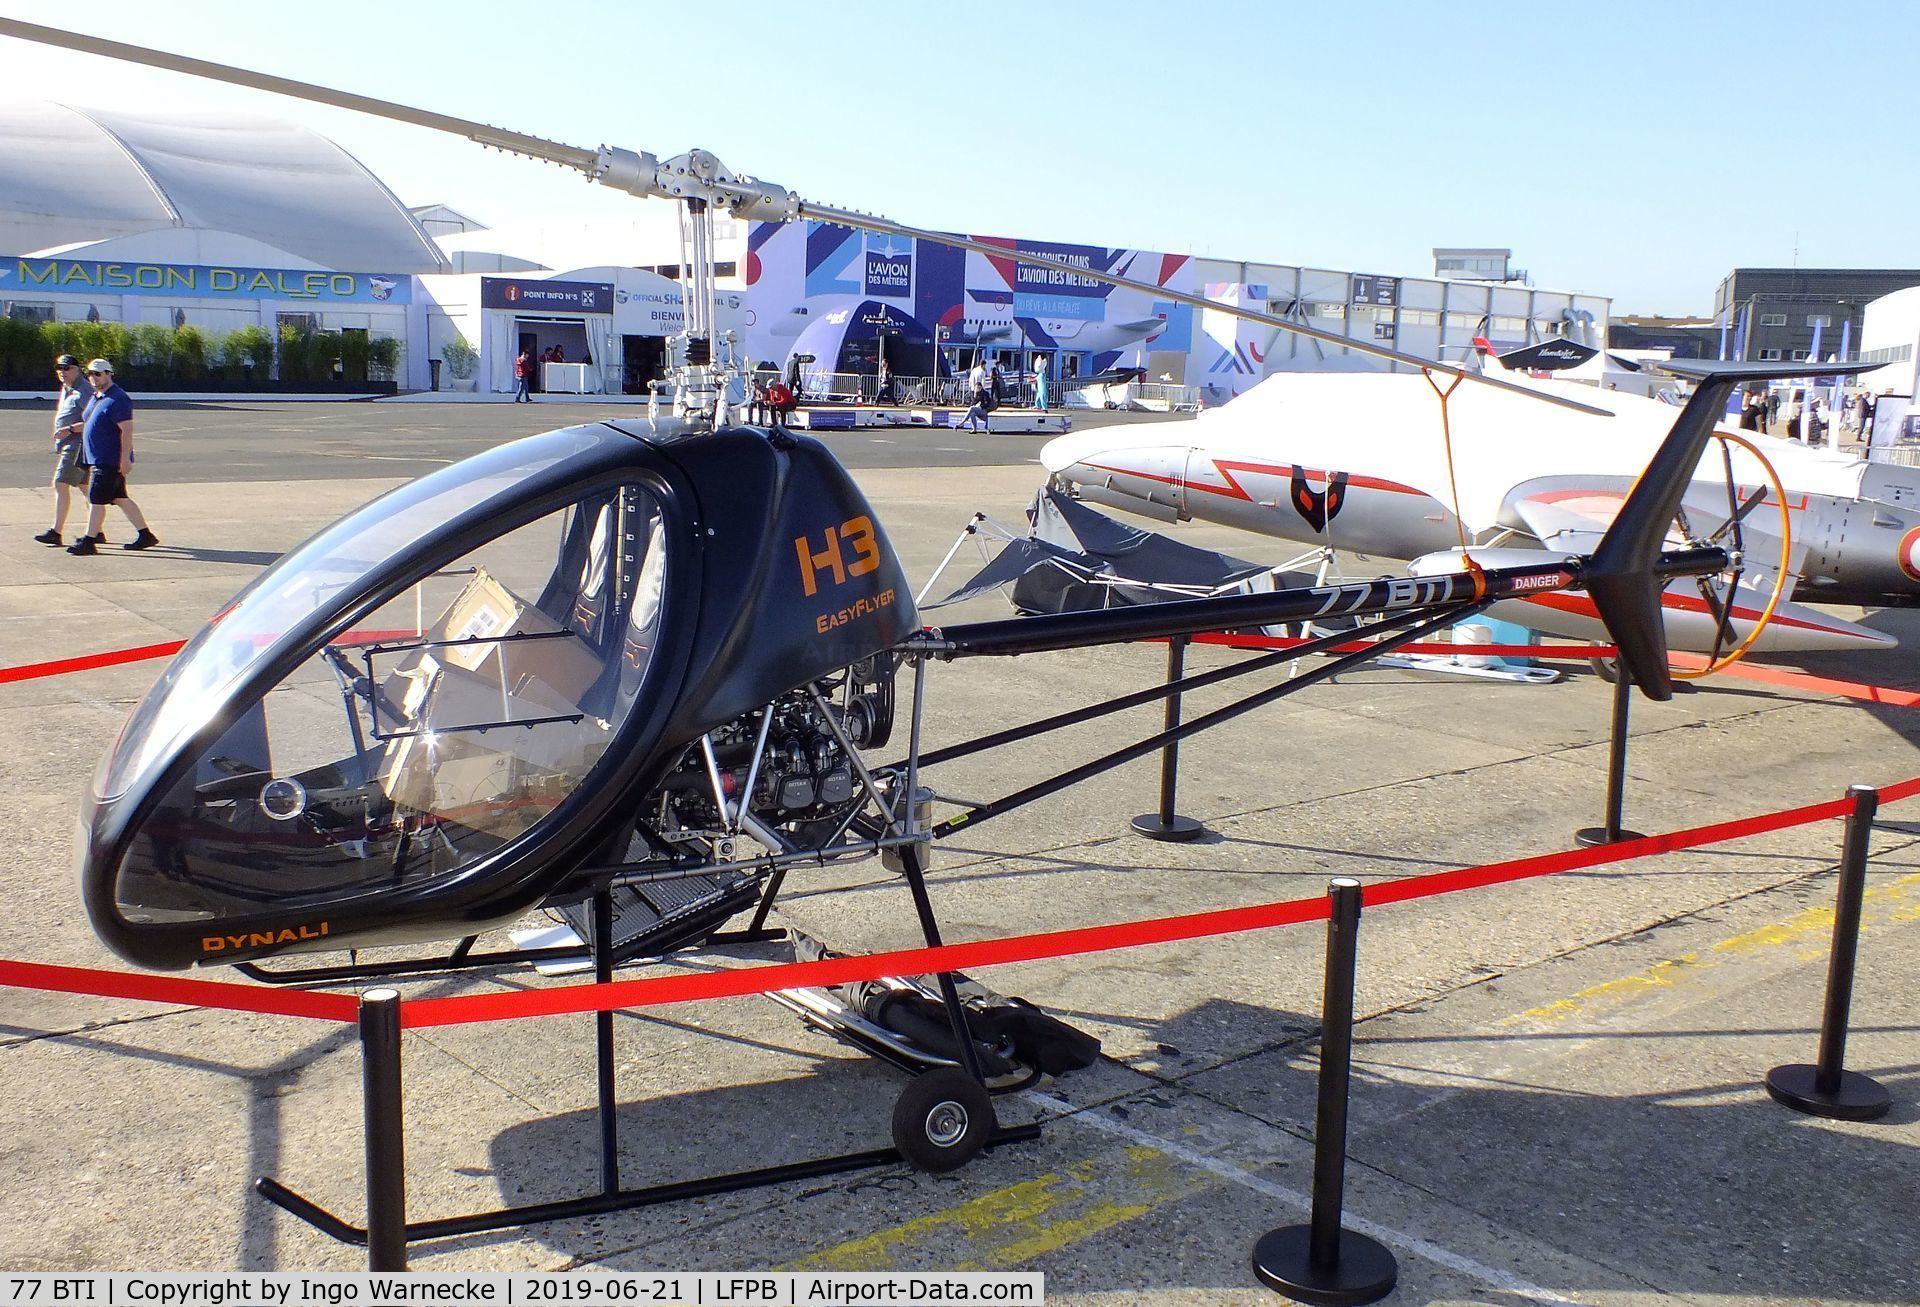 77 BTI, , Dynali H3 EasyFlyer at the Aerosalon 2019, Paris